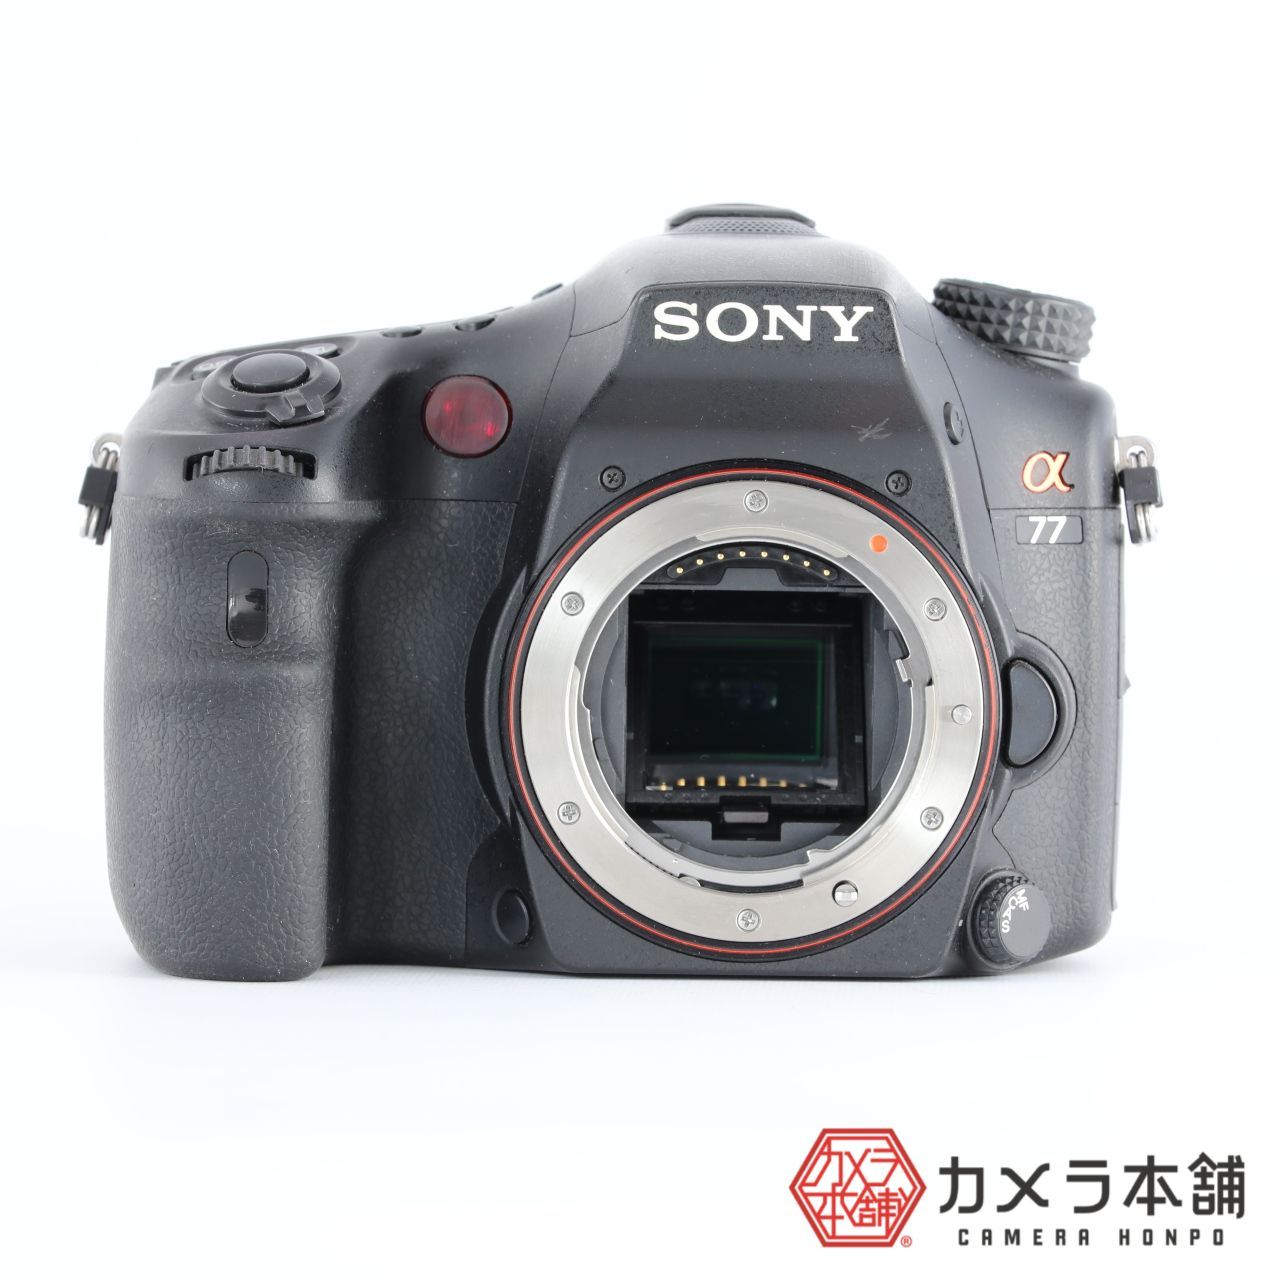 SONY ソニー デジタル一眼 α77 ボディ SLT-A77V カメラ本舗｜Camera honpo メルカリ